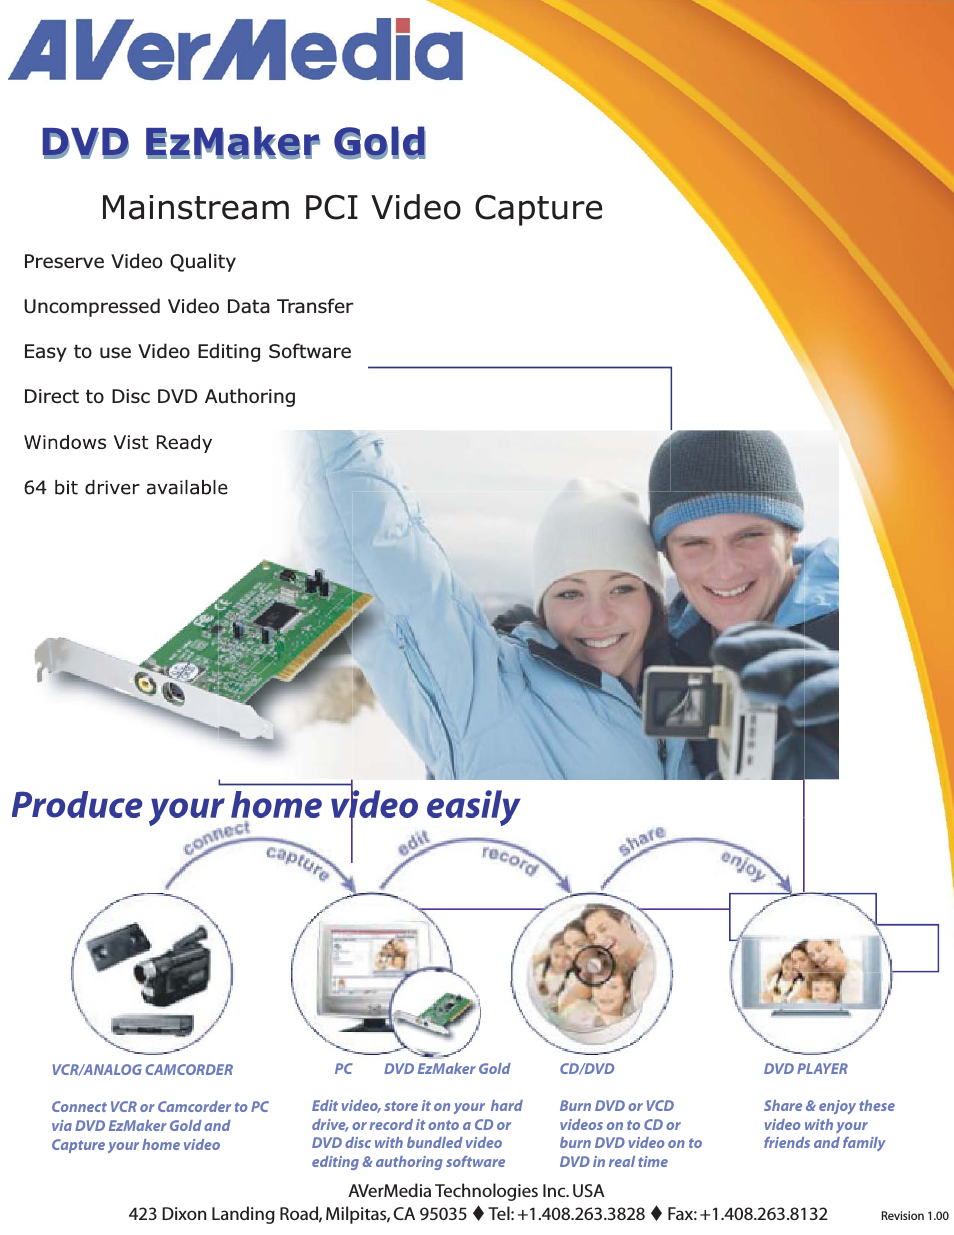 Mainstream PCI Video Capture